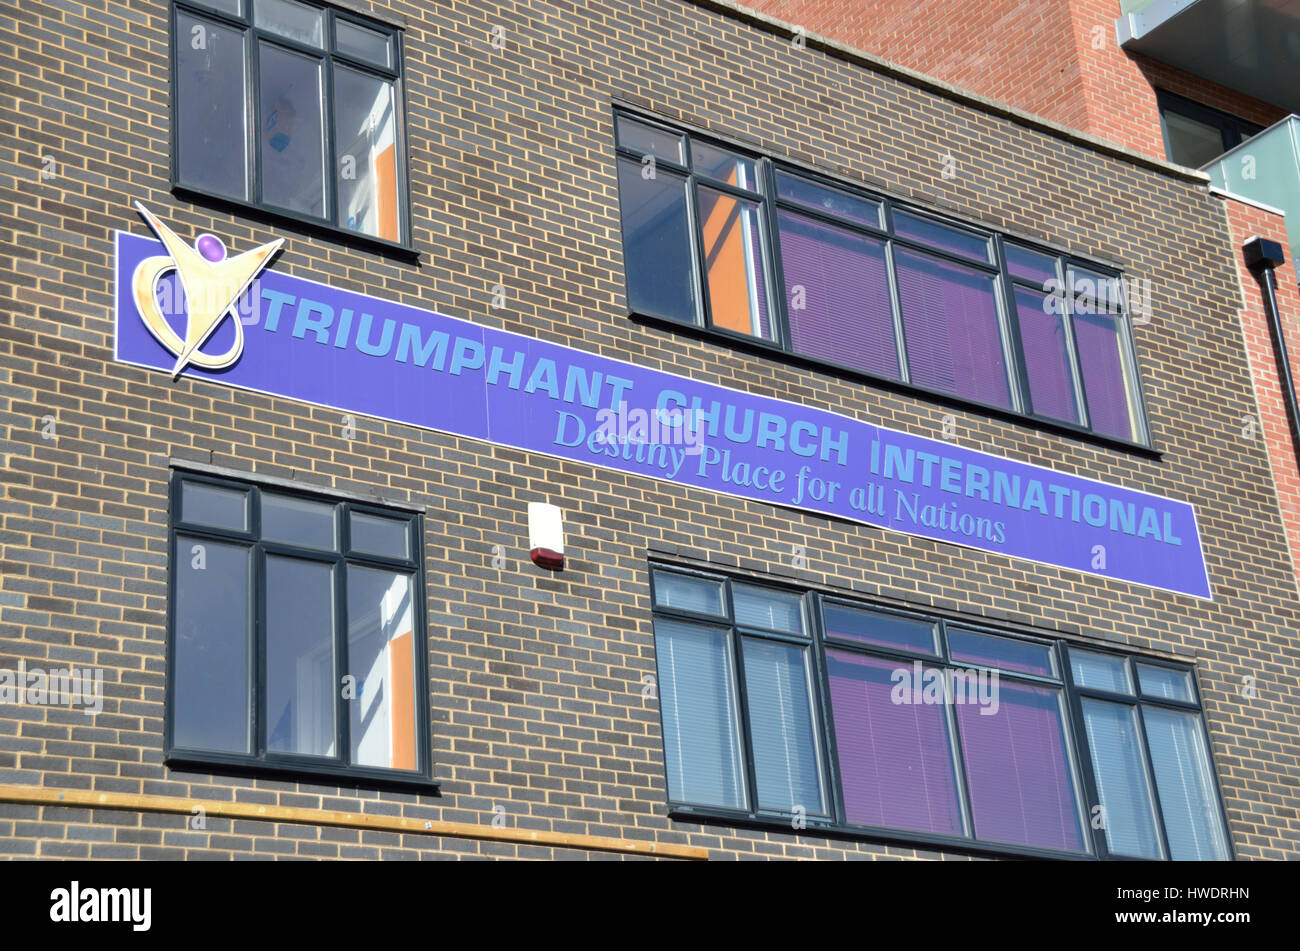 Triumphant Church International in West Green Rd, Tottenham, London, UK. Stock Photo